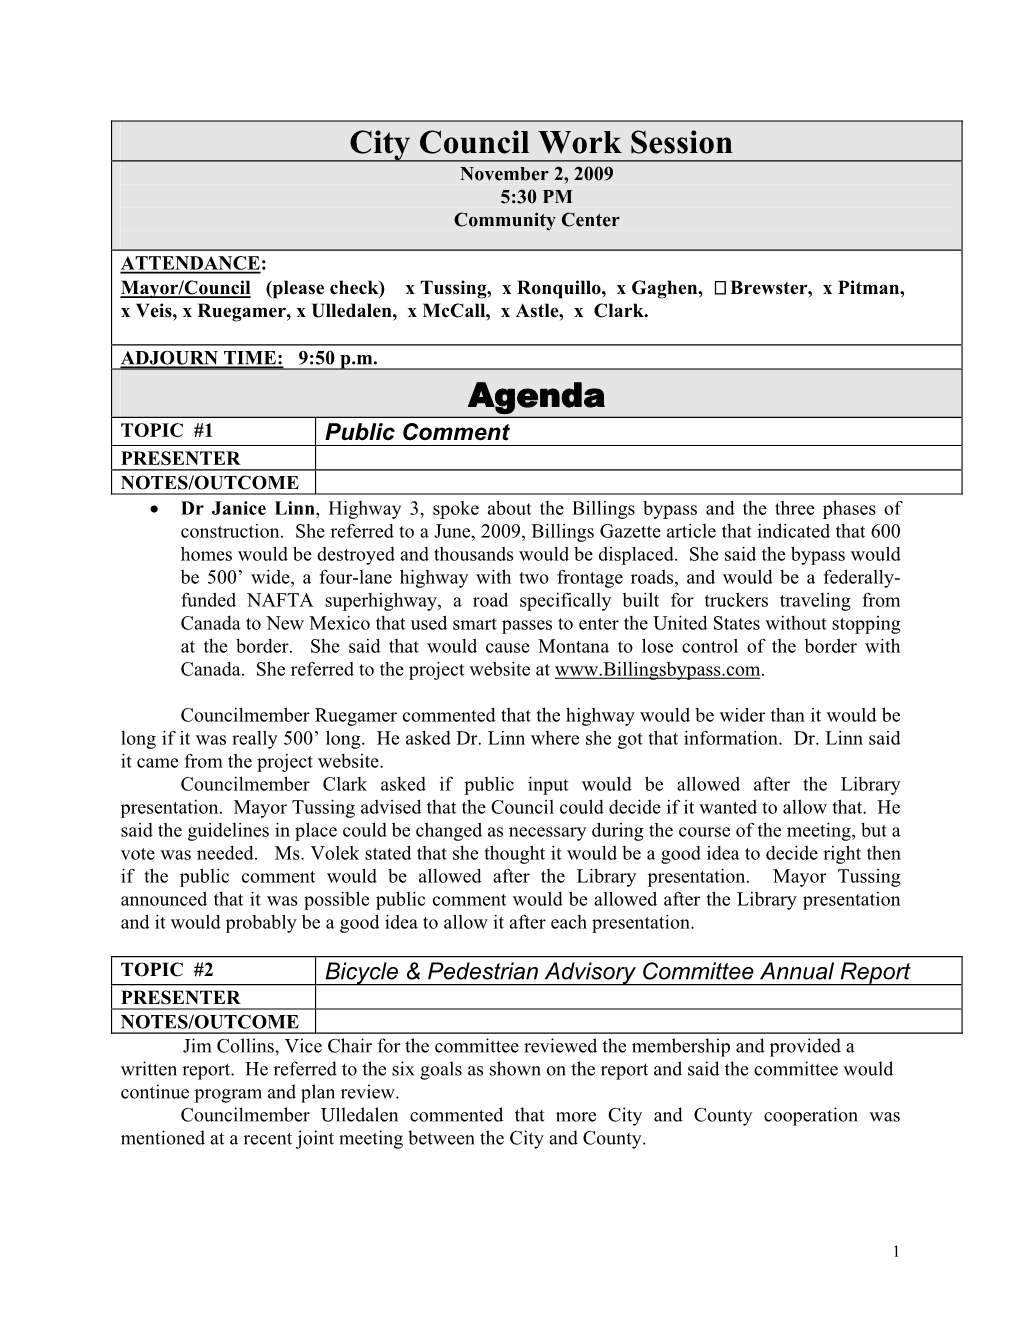 City Council Work Session Agenda